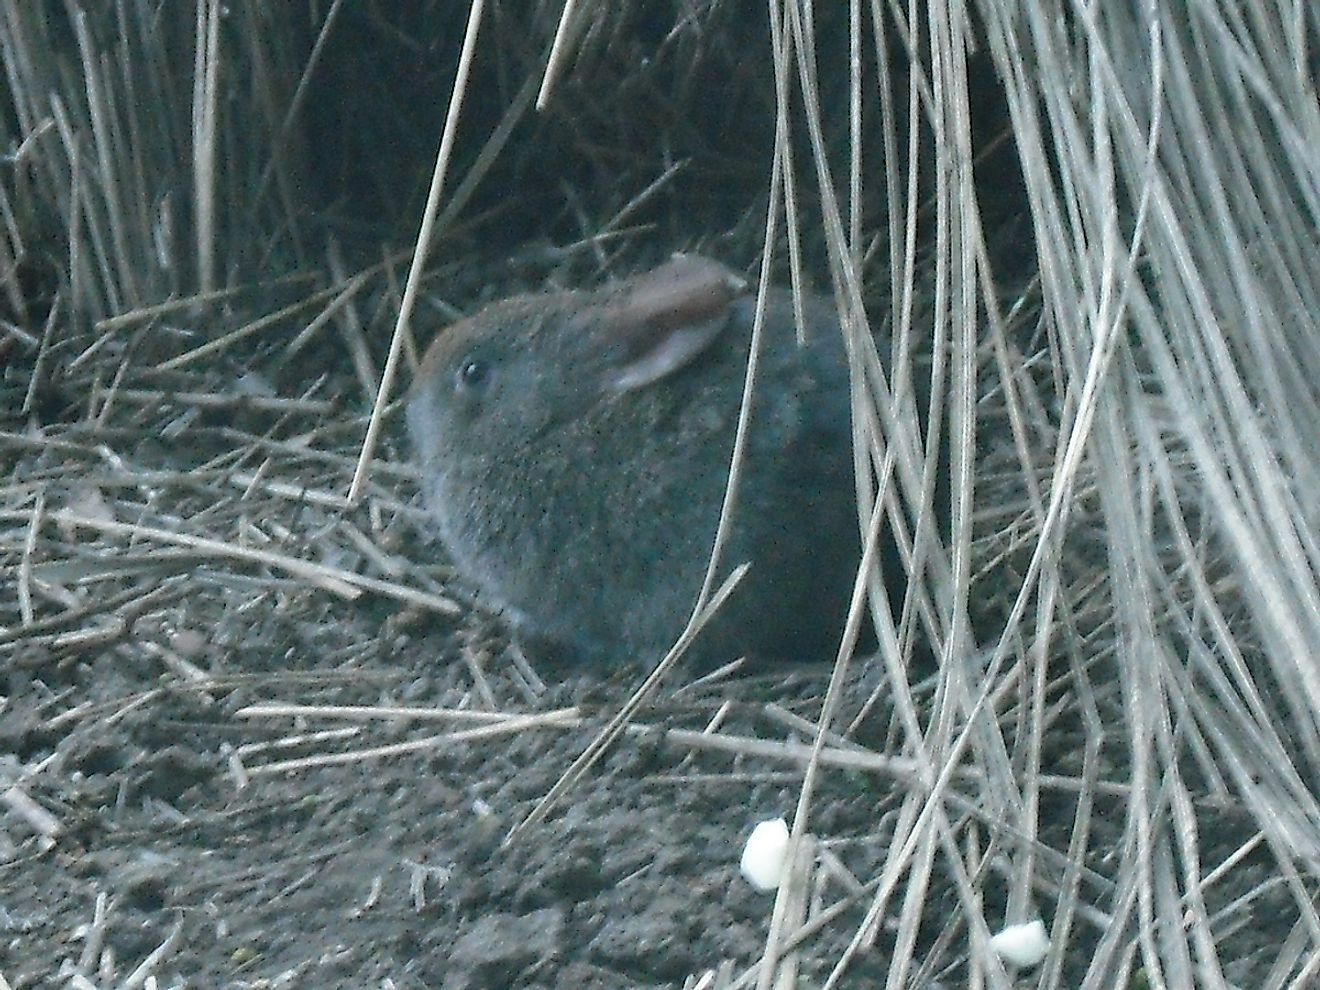 Volcano Rabbit. Image credit: dispale/Wikimedia.org